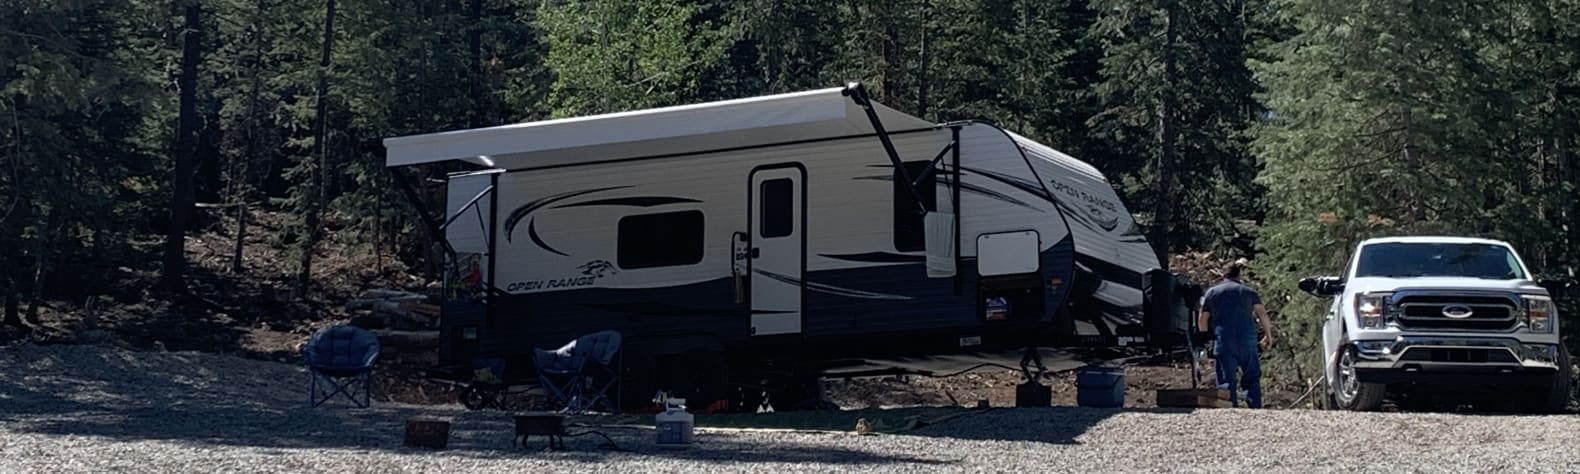 Duck Creek RV Camping